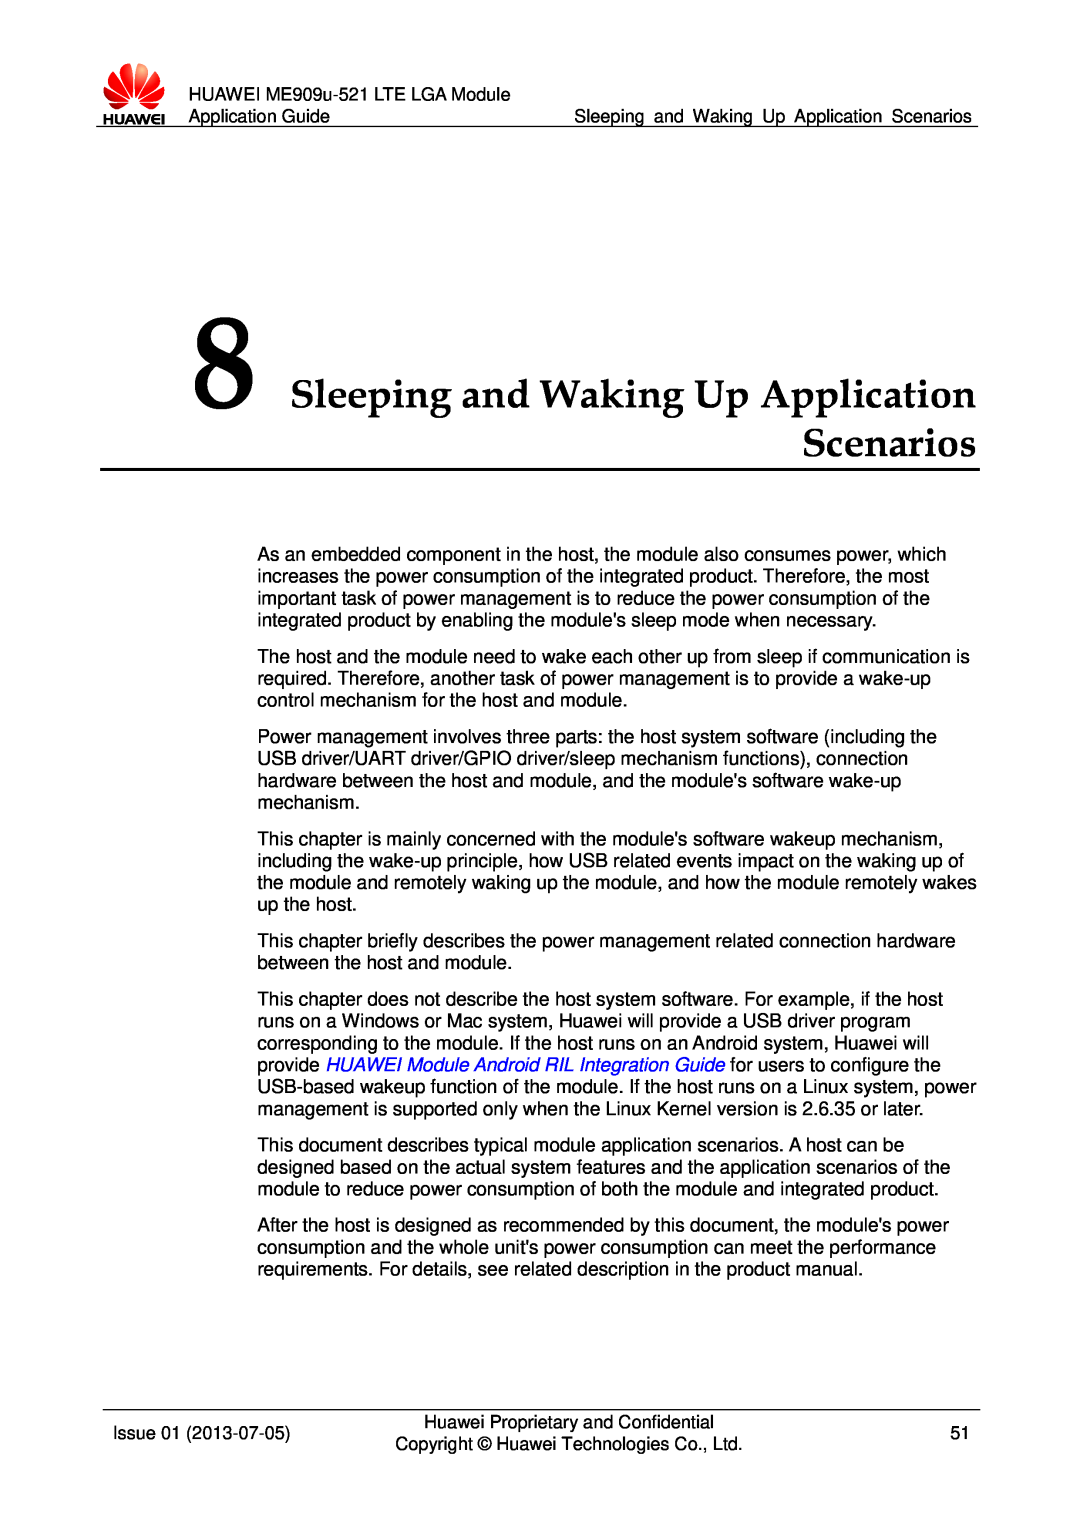 Huawei ME909u-521 manual Sleeping and Waking Up Application Scenarios 